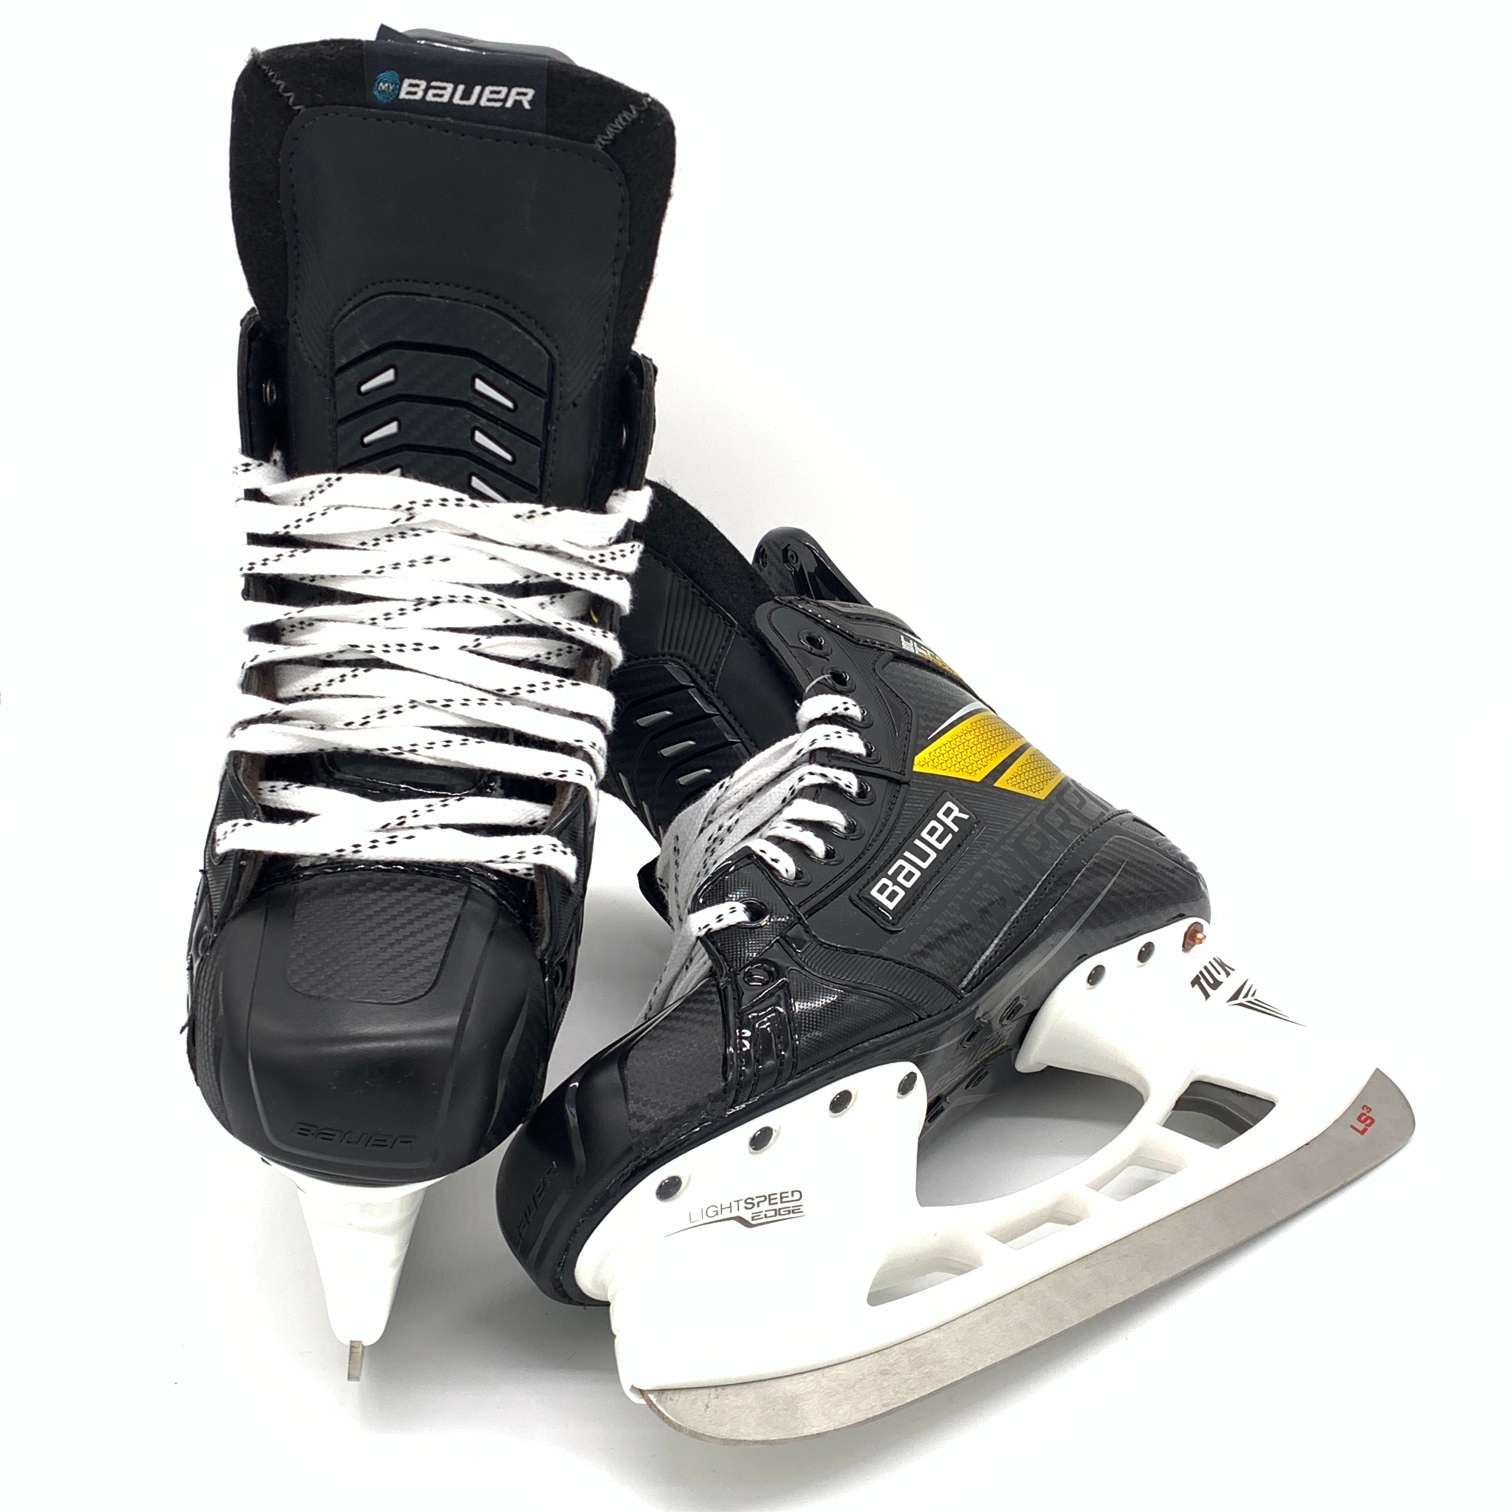 Senior New Bauer Supreme UltraSonic Hockey Skates Regular Width Pro Stock Size 7.75D